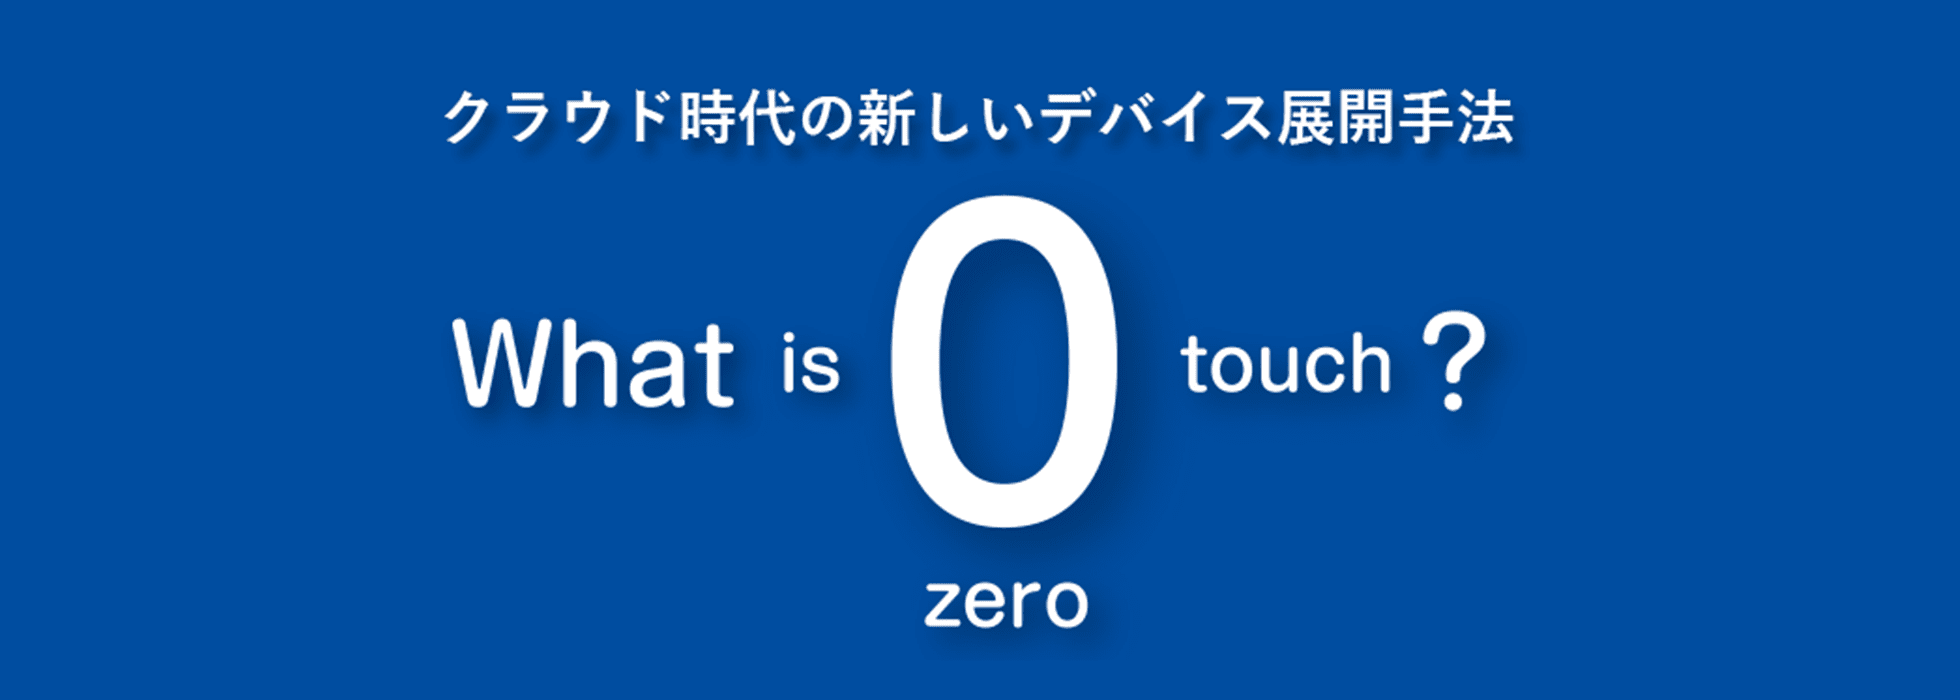 NEh̐VfoCXWJ@ -What is zero touch?-